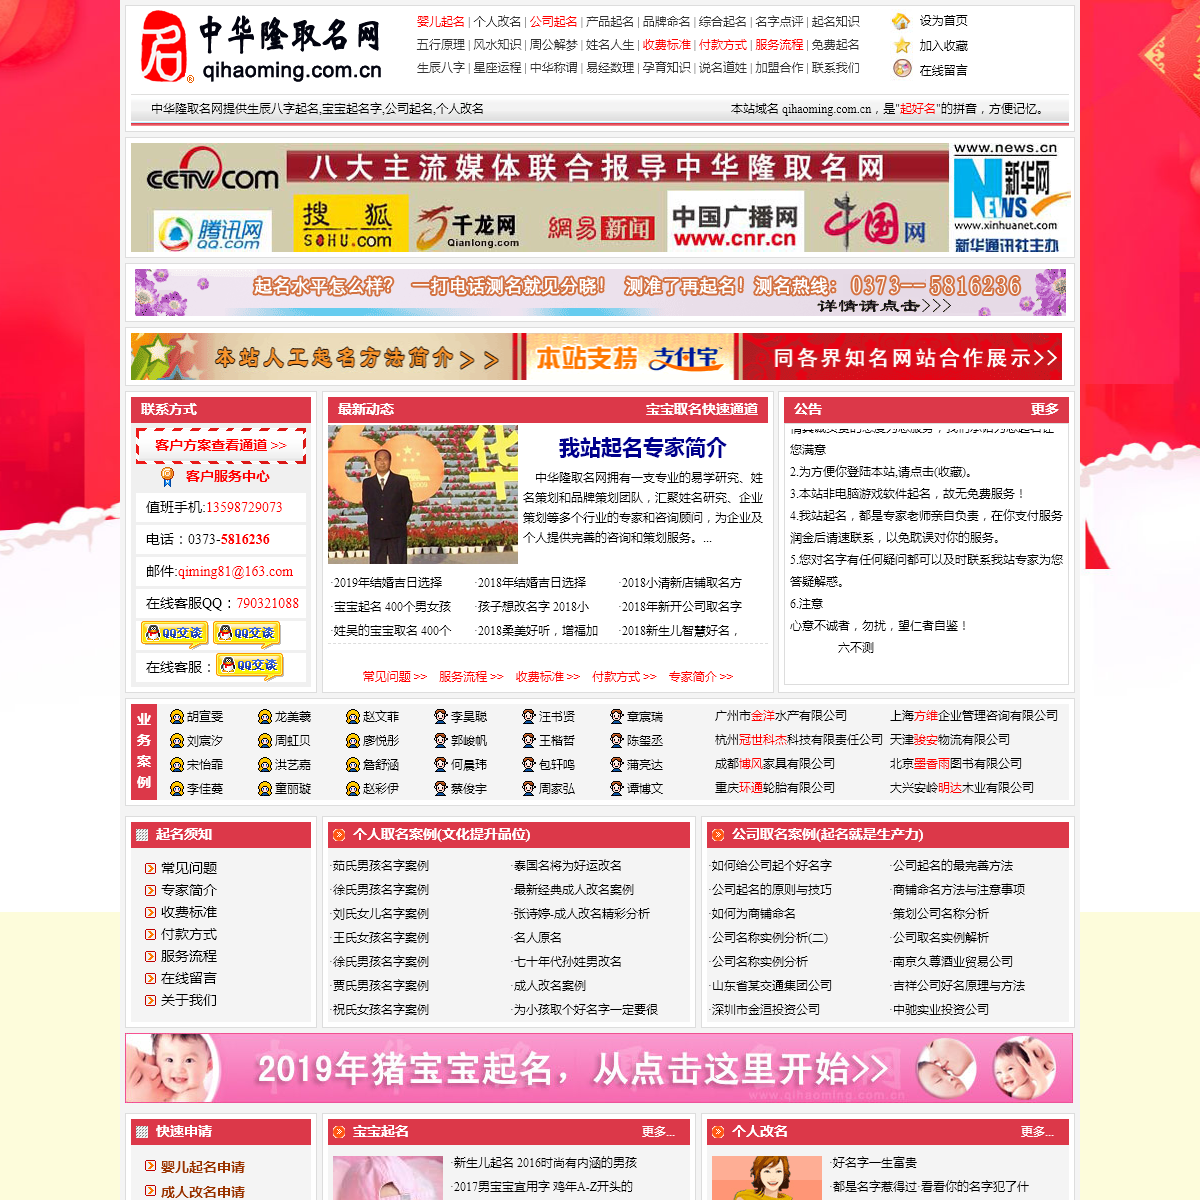 A complete backup of qihaoming.com.cn